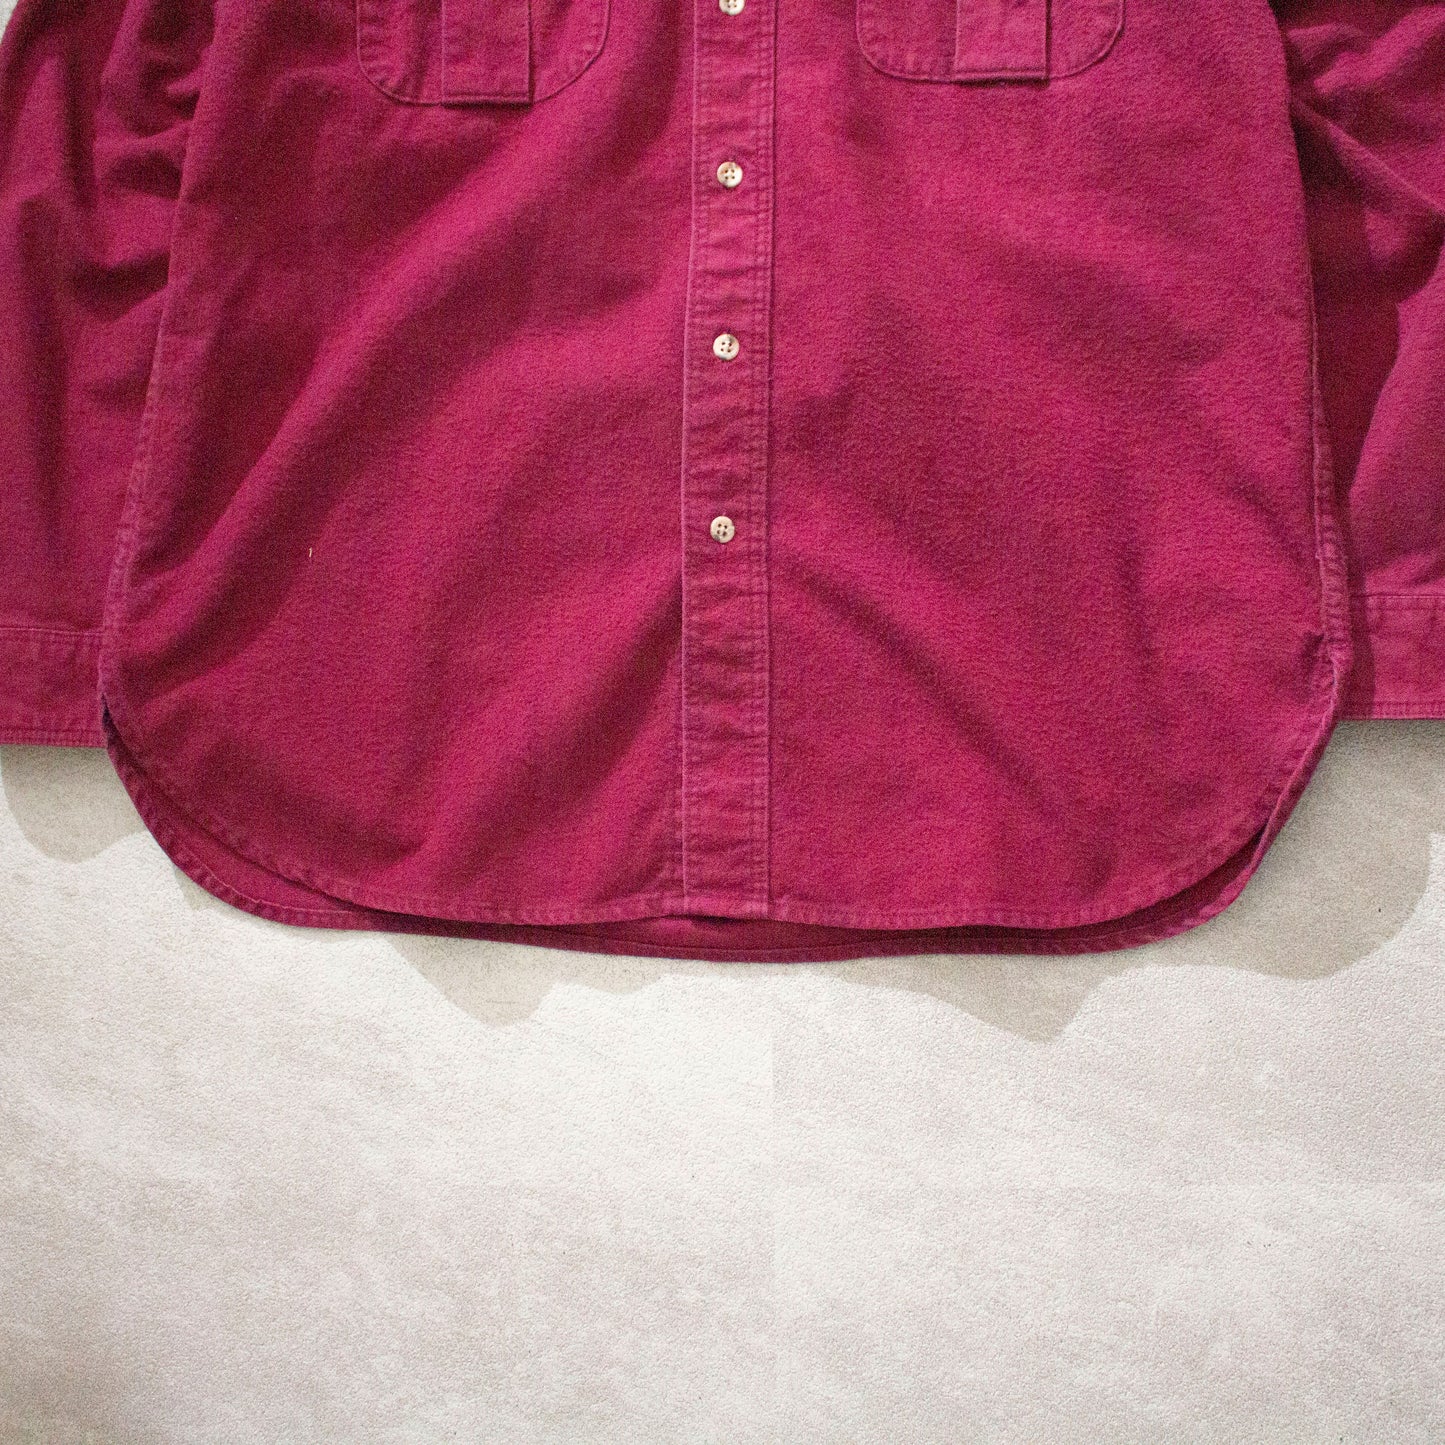 Chamois Cloth Shirt Made in U.S.A.